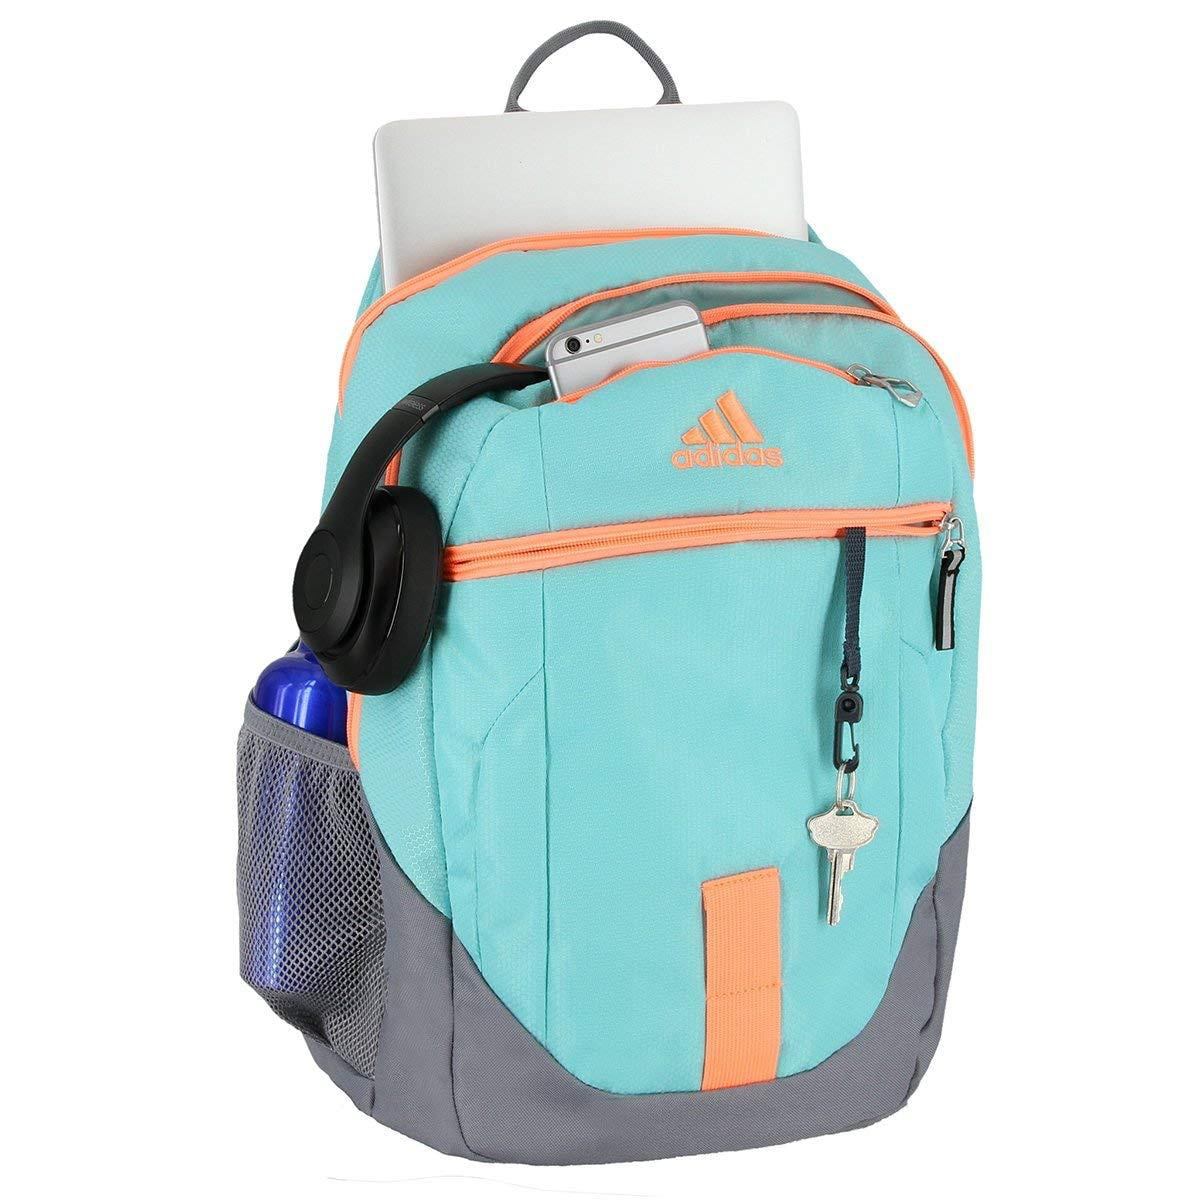 adidas aqua backpack